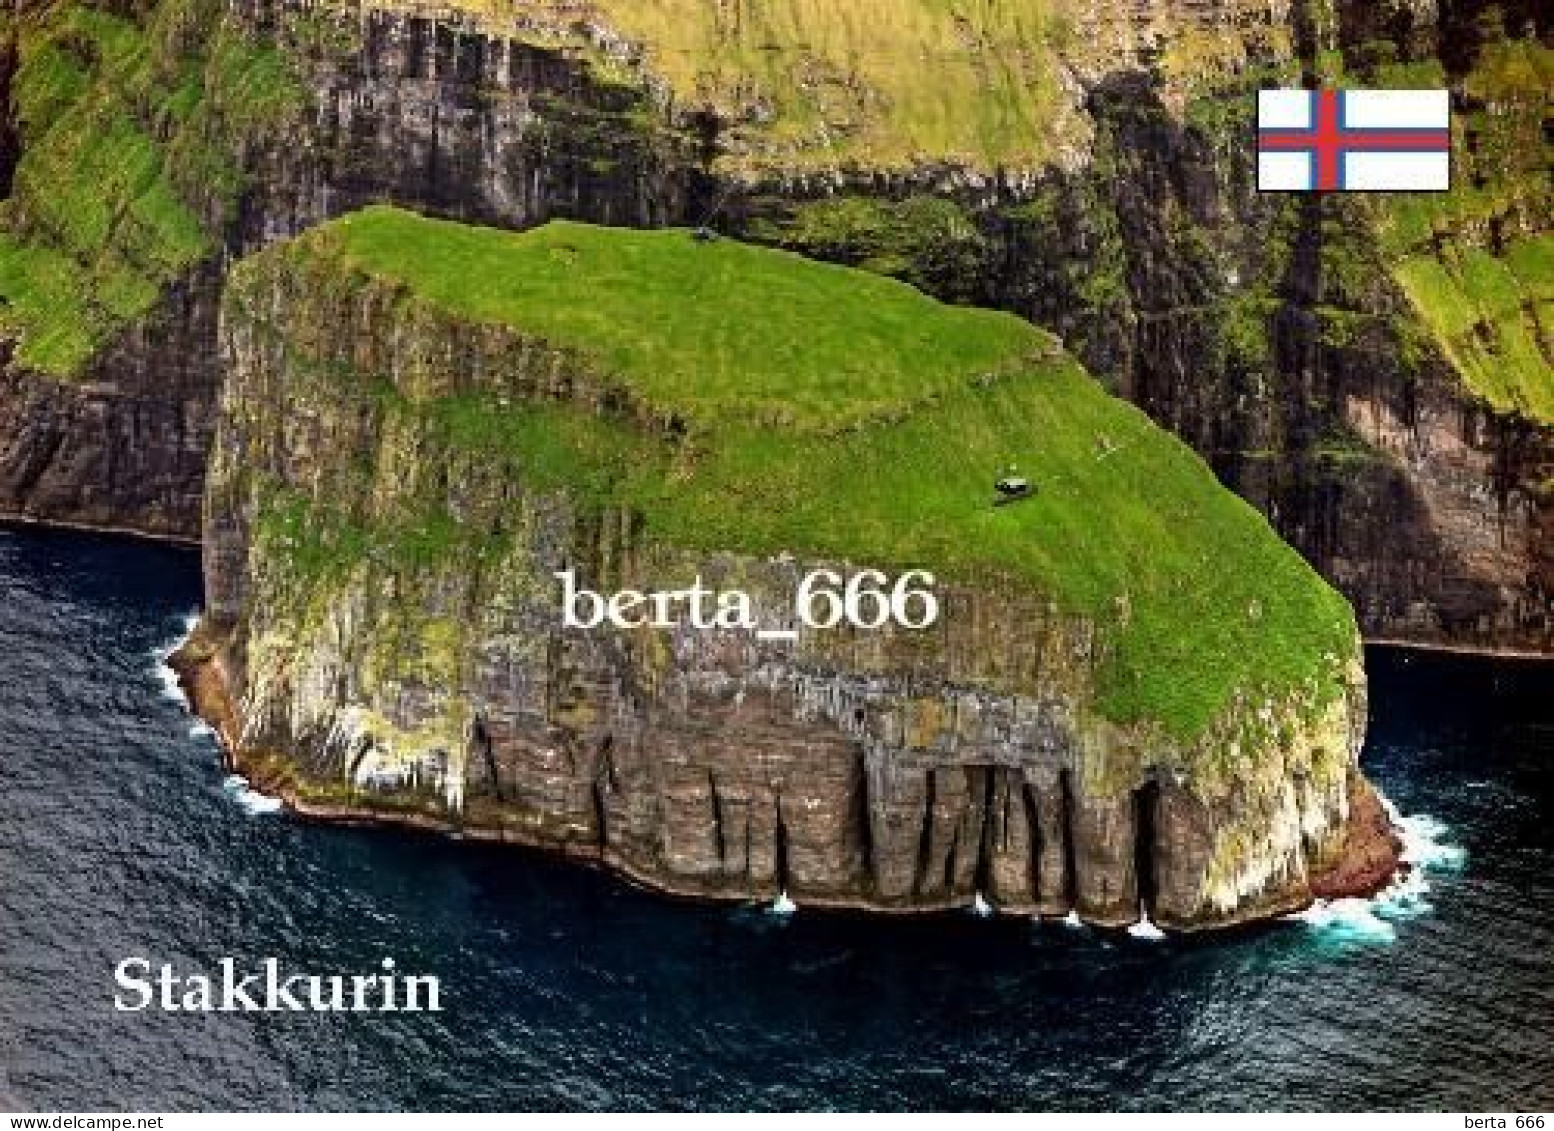 Faroe Islands Stakkurin Seastack New Postcard - Faroe Islands